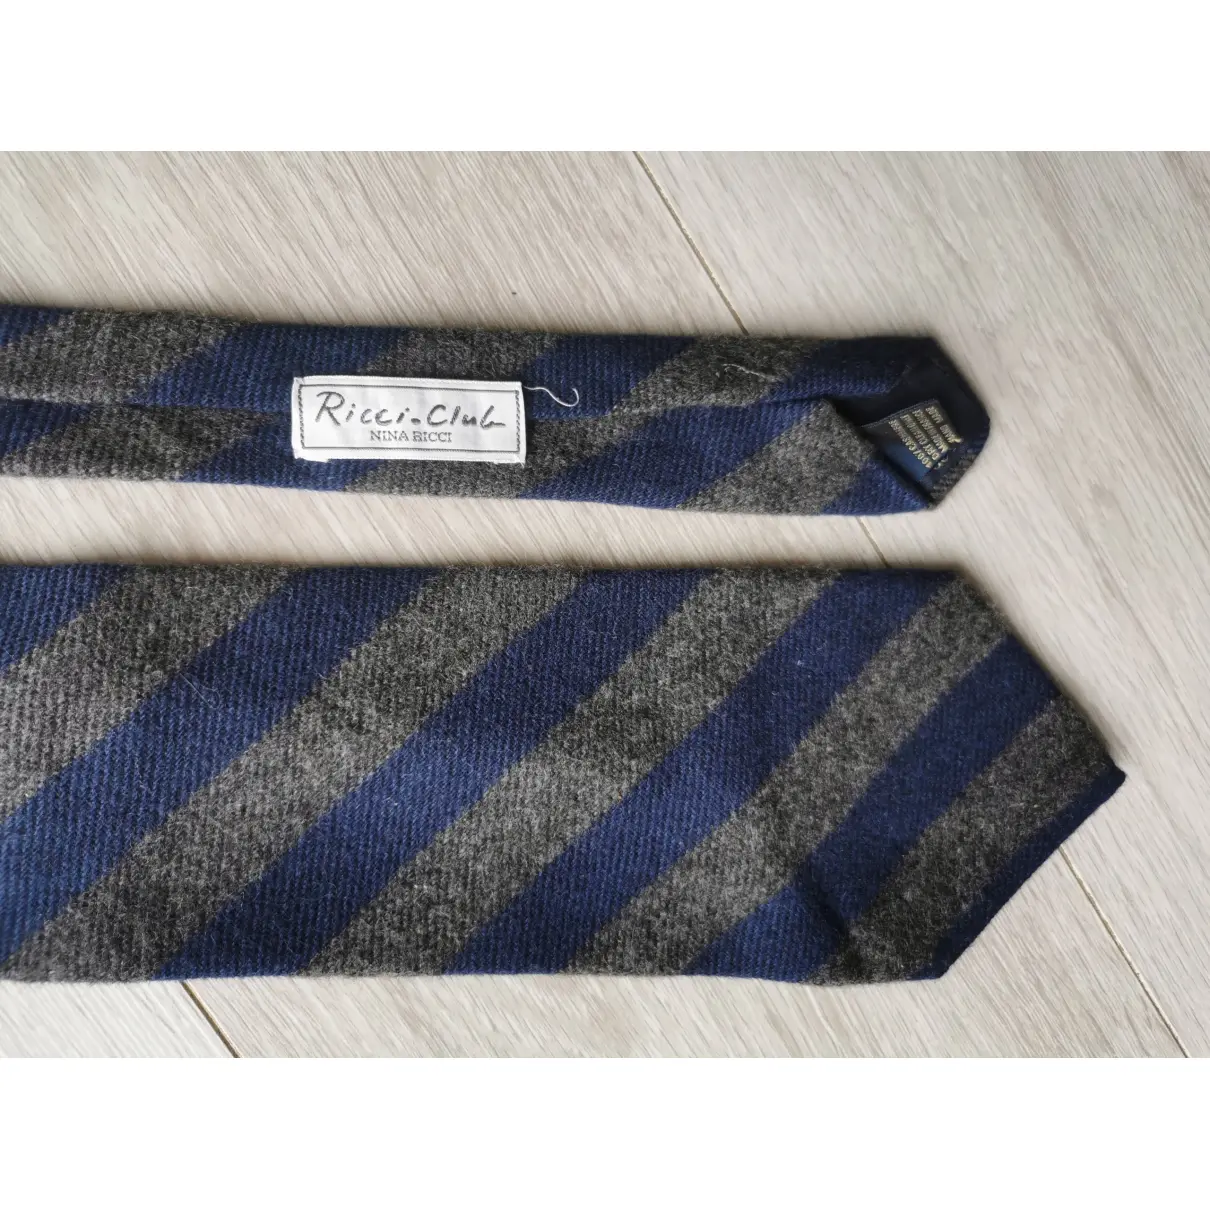 Buy Nina Ricci Cashmere tie online